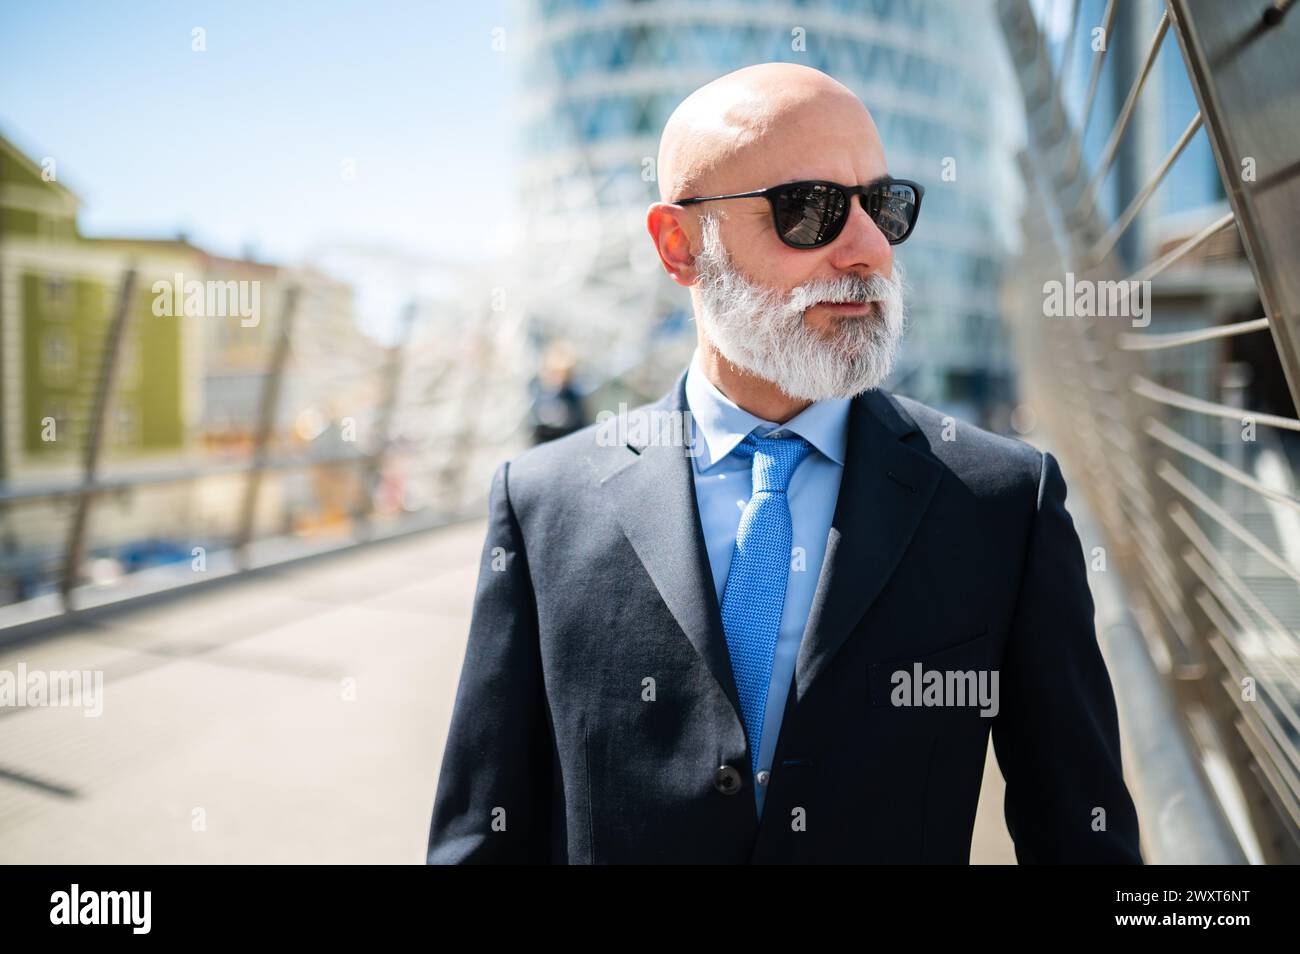 Mature bald stylish business man portrait with a white beard outdoor wearing sunglasses Stock Photo